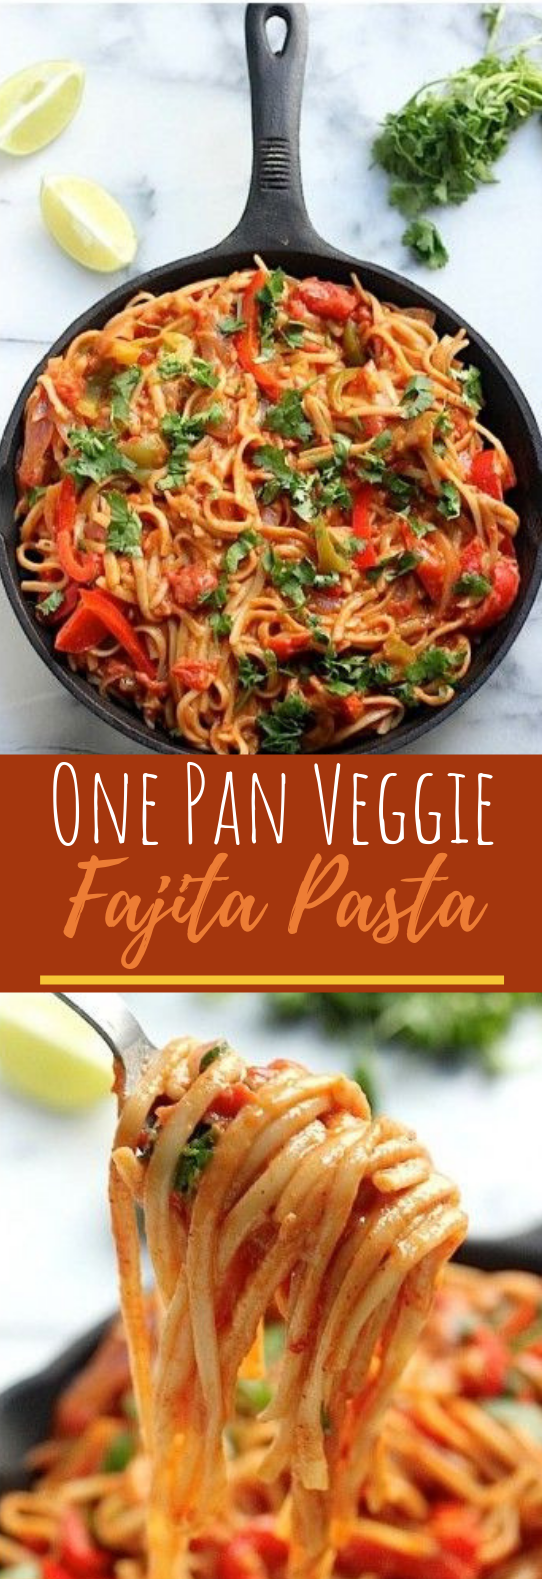 One-Pan Veggie Fajita Pasta #dinner #vegetarian